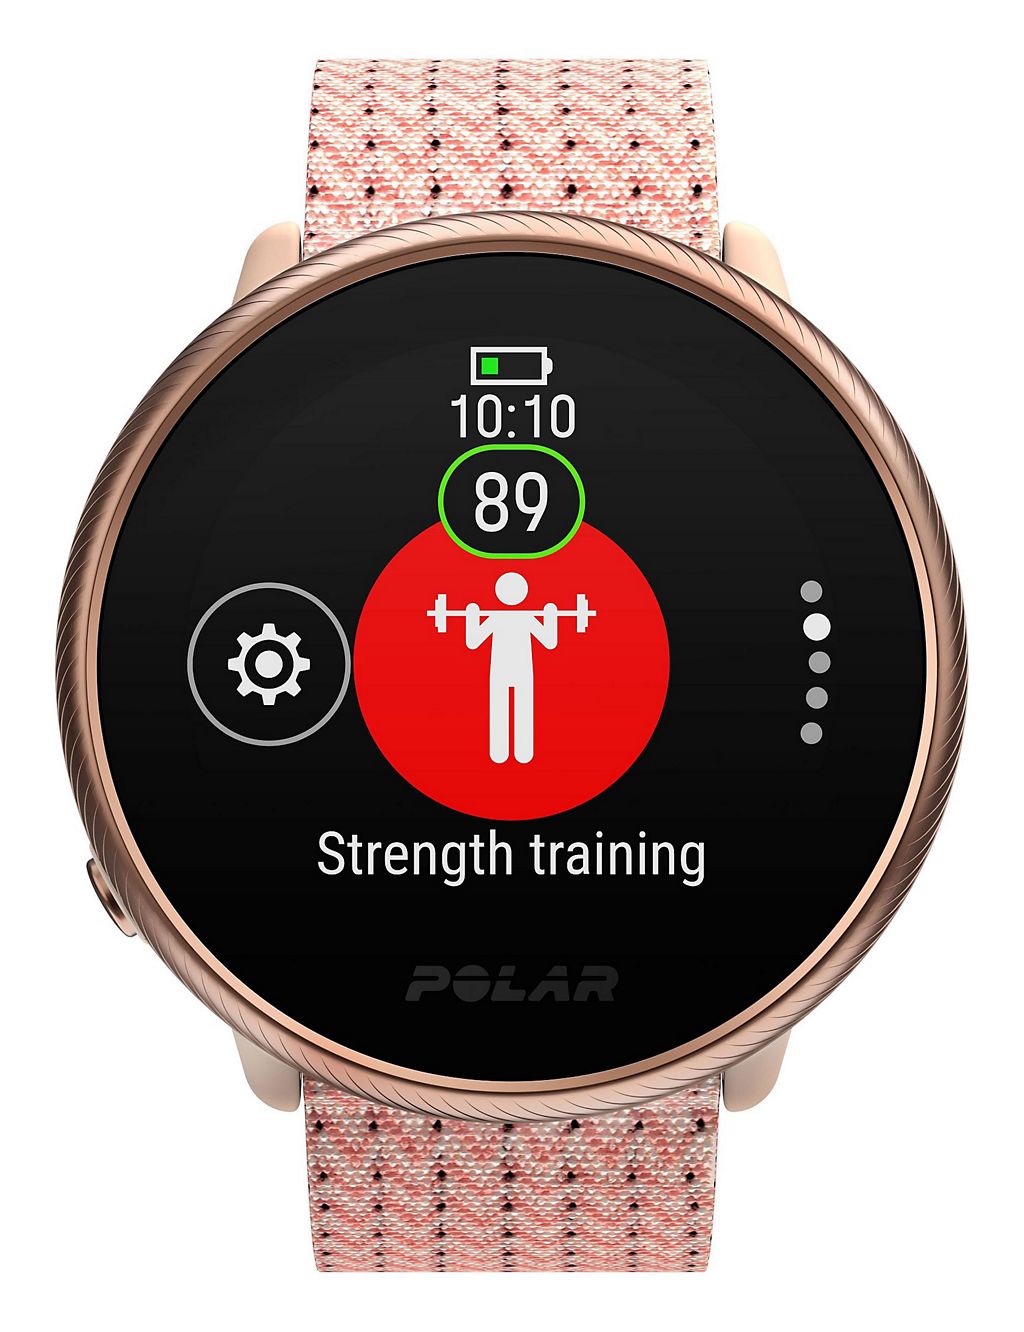 Polar Lignite 2 Fitness Smartwatch 7 of 10